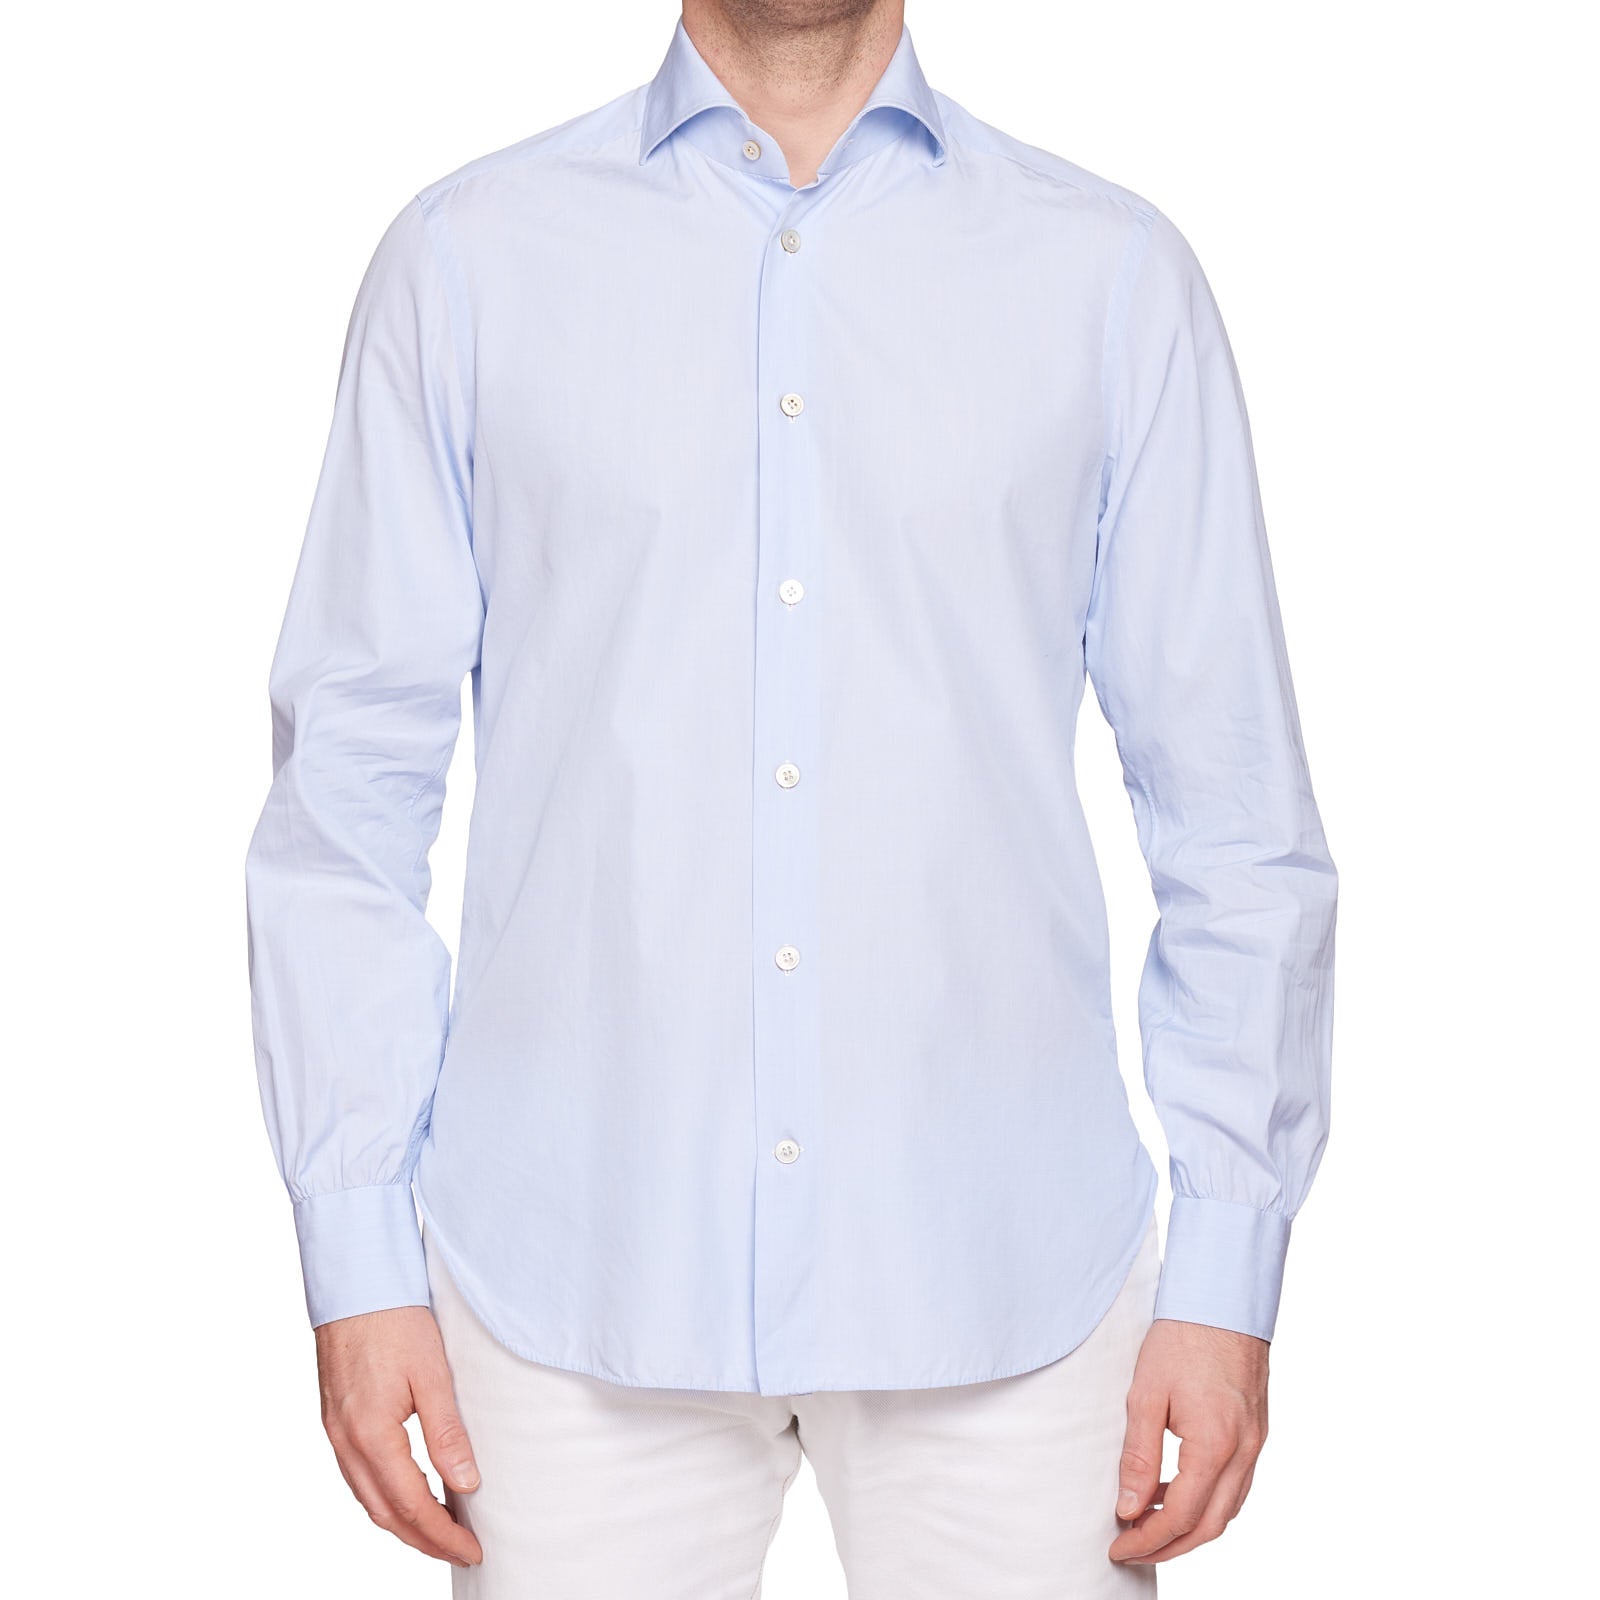 KITON Napoli Handmade Bespoke Light Blue End-on-End Cotton Dress Shirt EU 40 US 15.75 KITON